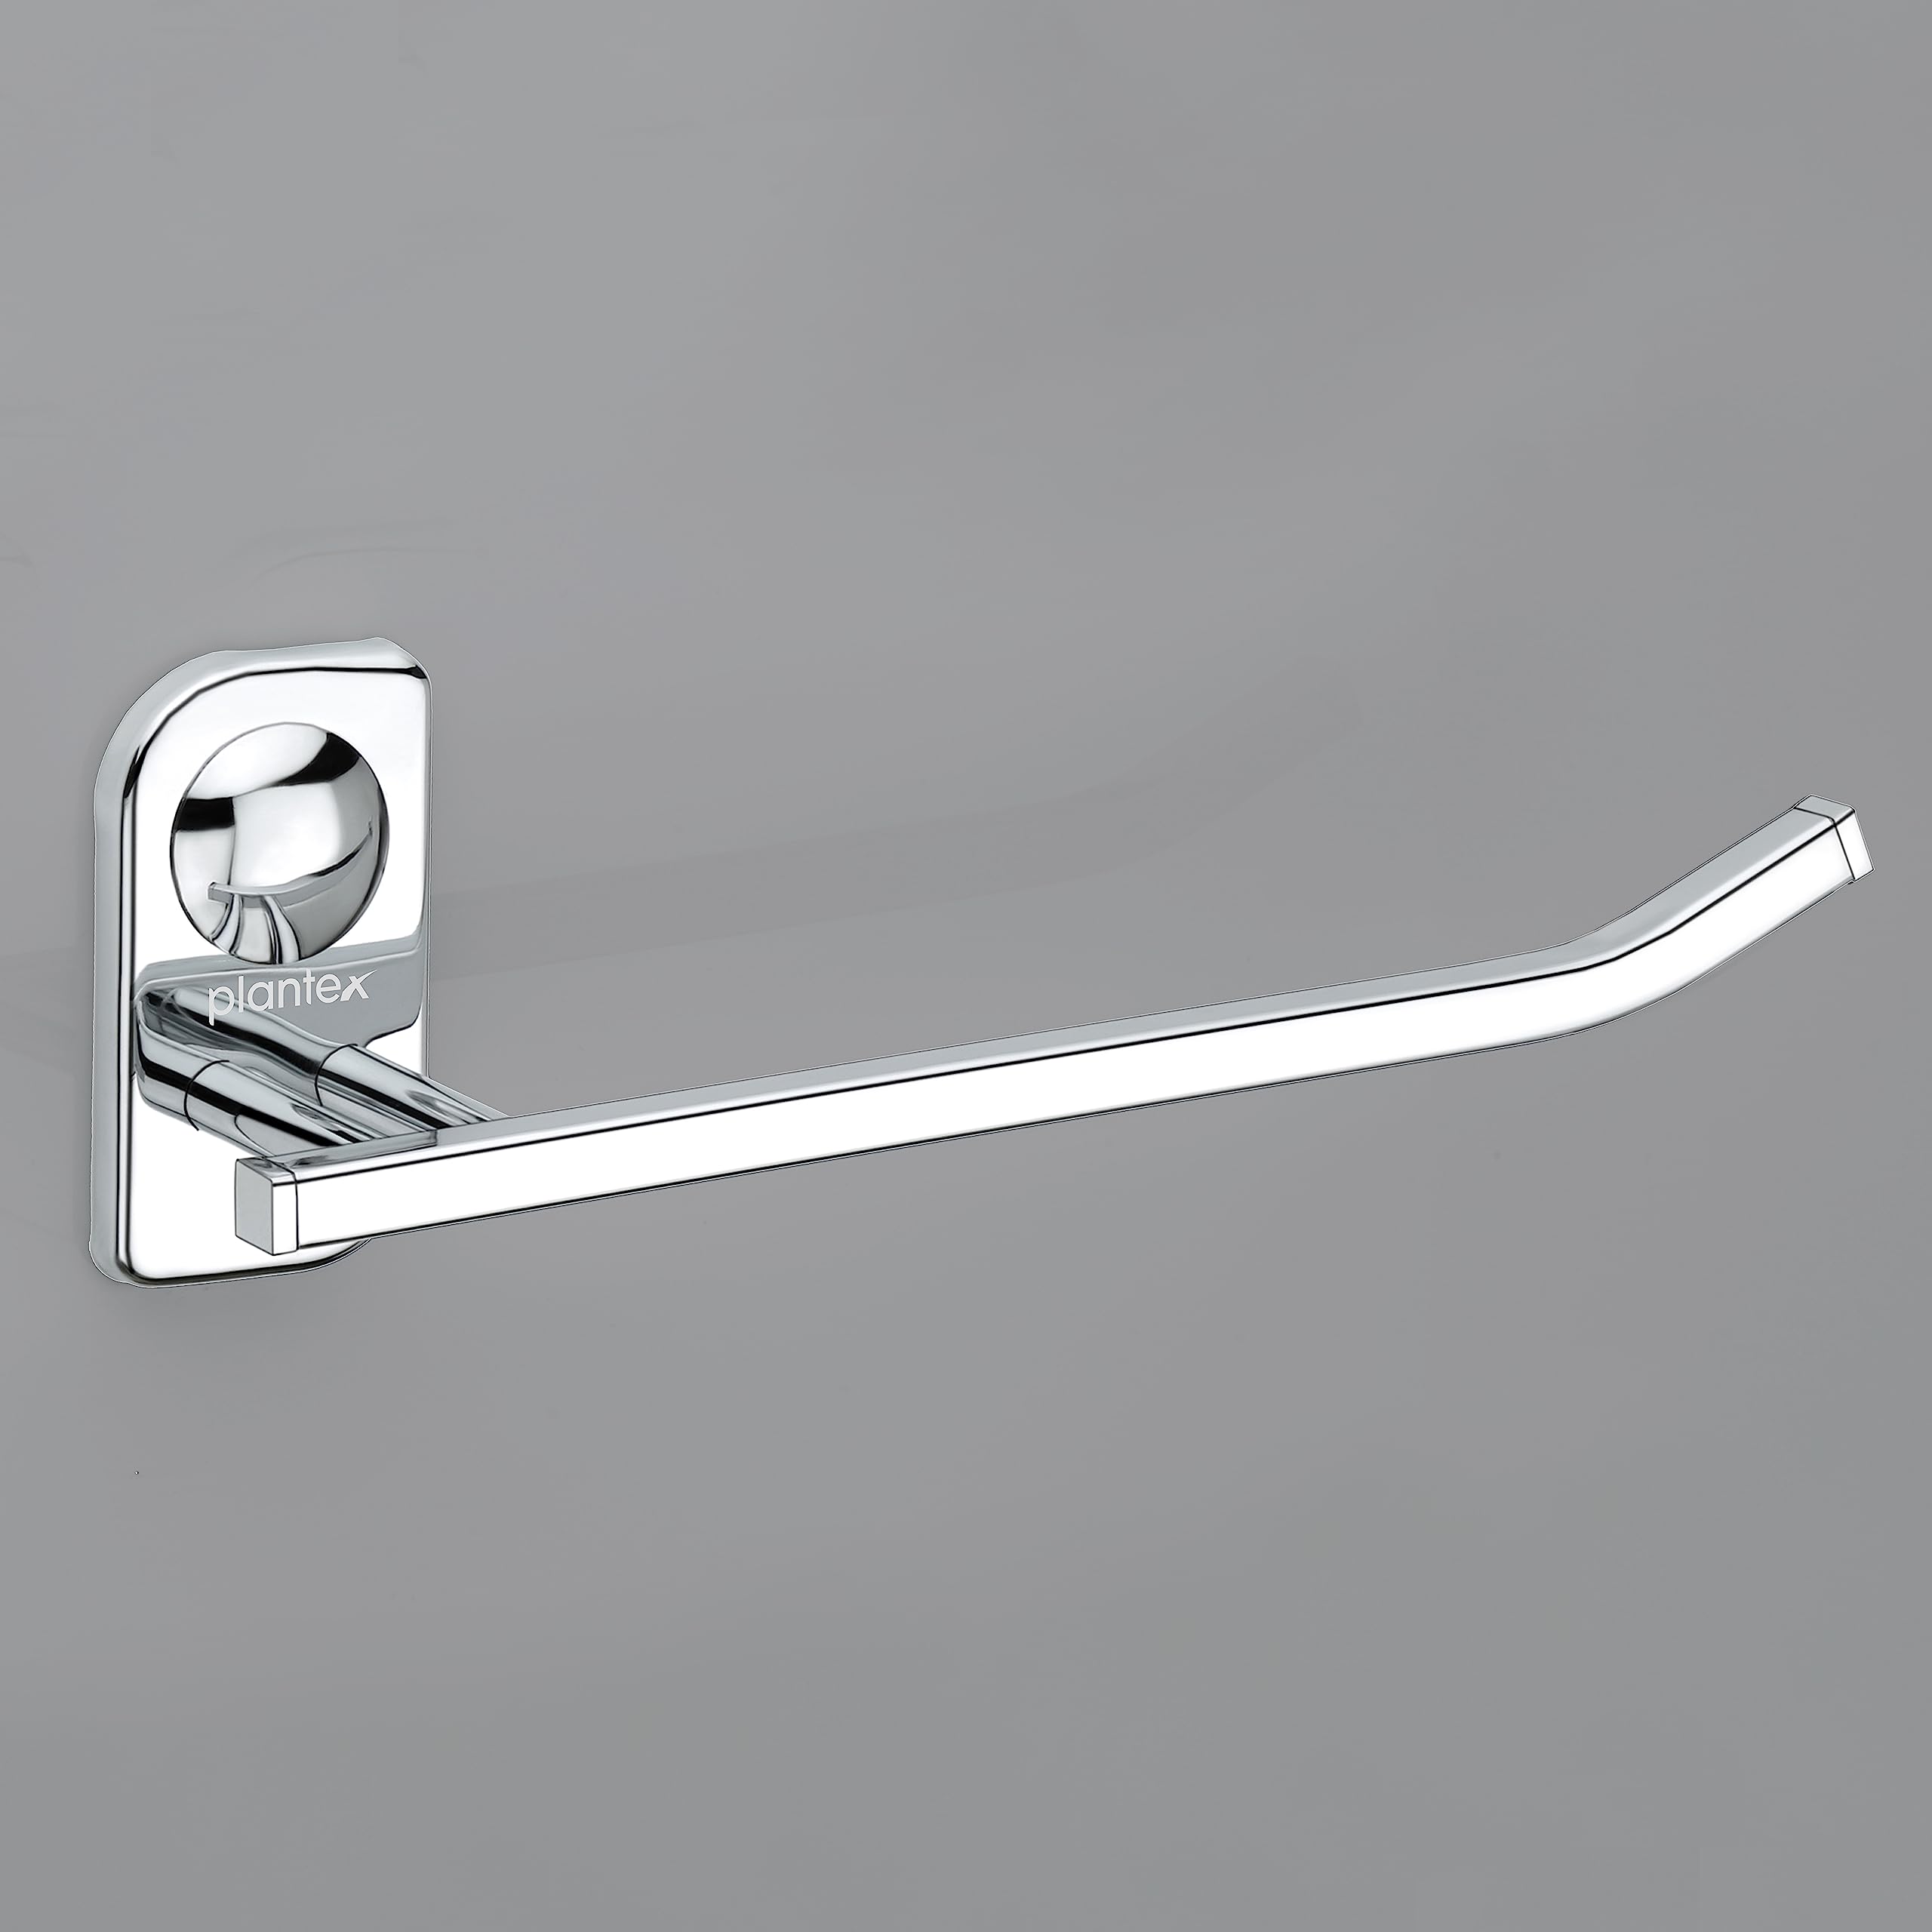 Plantex Dream Bathroom Accessories - Stainless Steel 6 Pcs Bathroom Organizer Set - Folding Towel Rack/Towel Rod/Napkin Ring/Soap Dish/Tumbler Holder/Robe Hook -(Chrome)